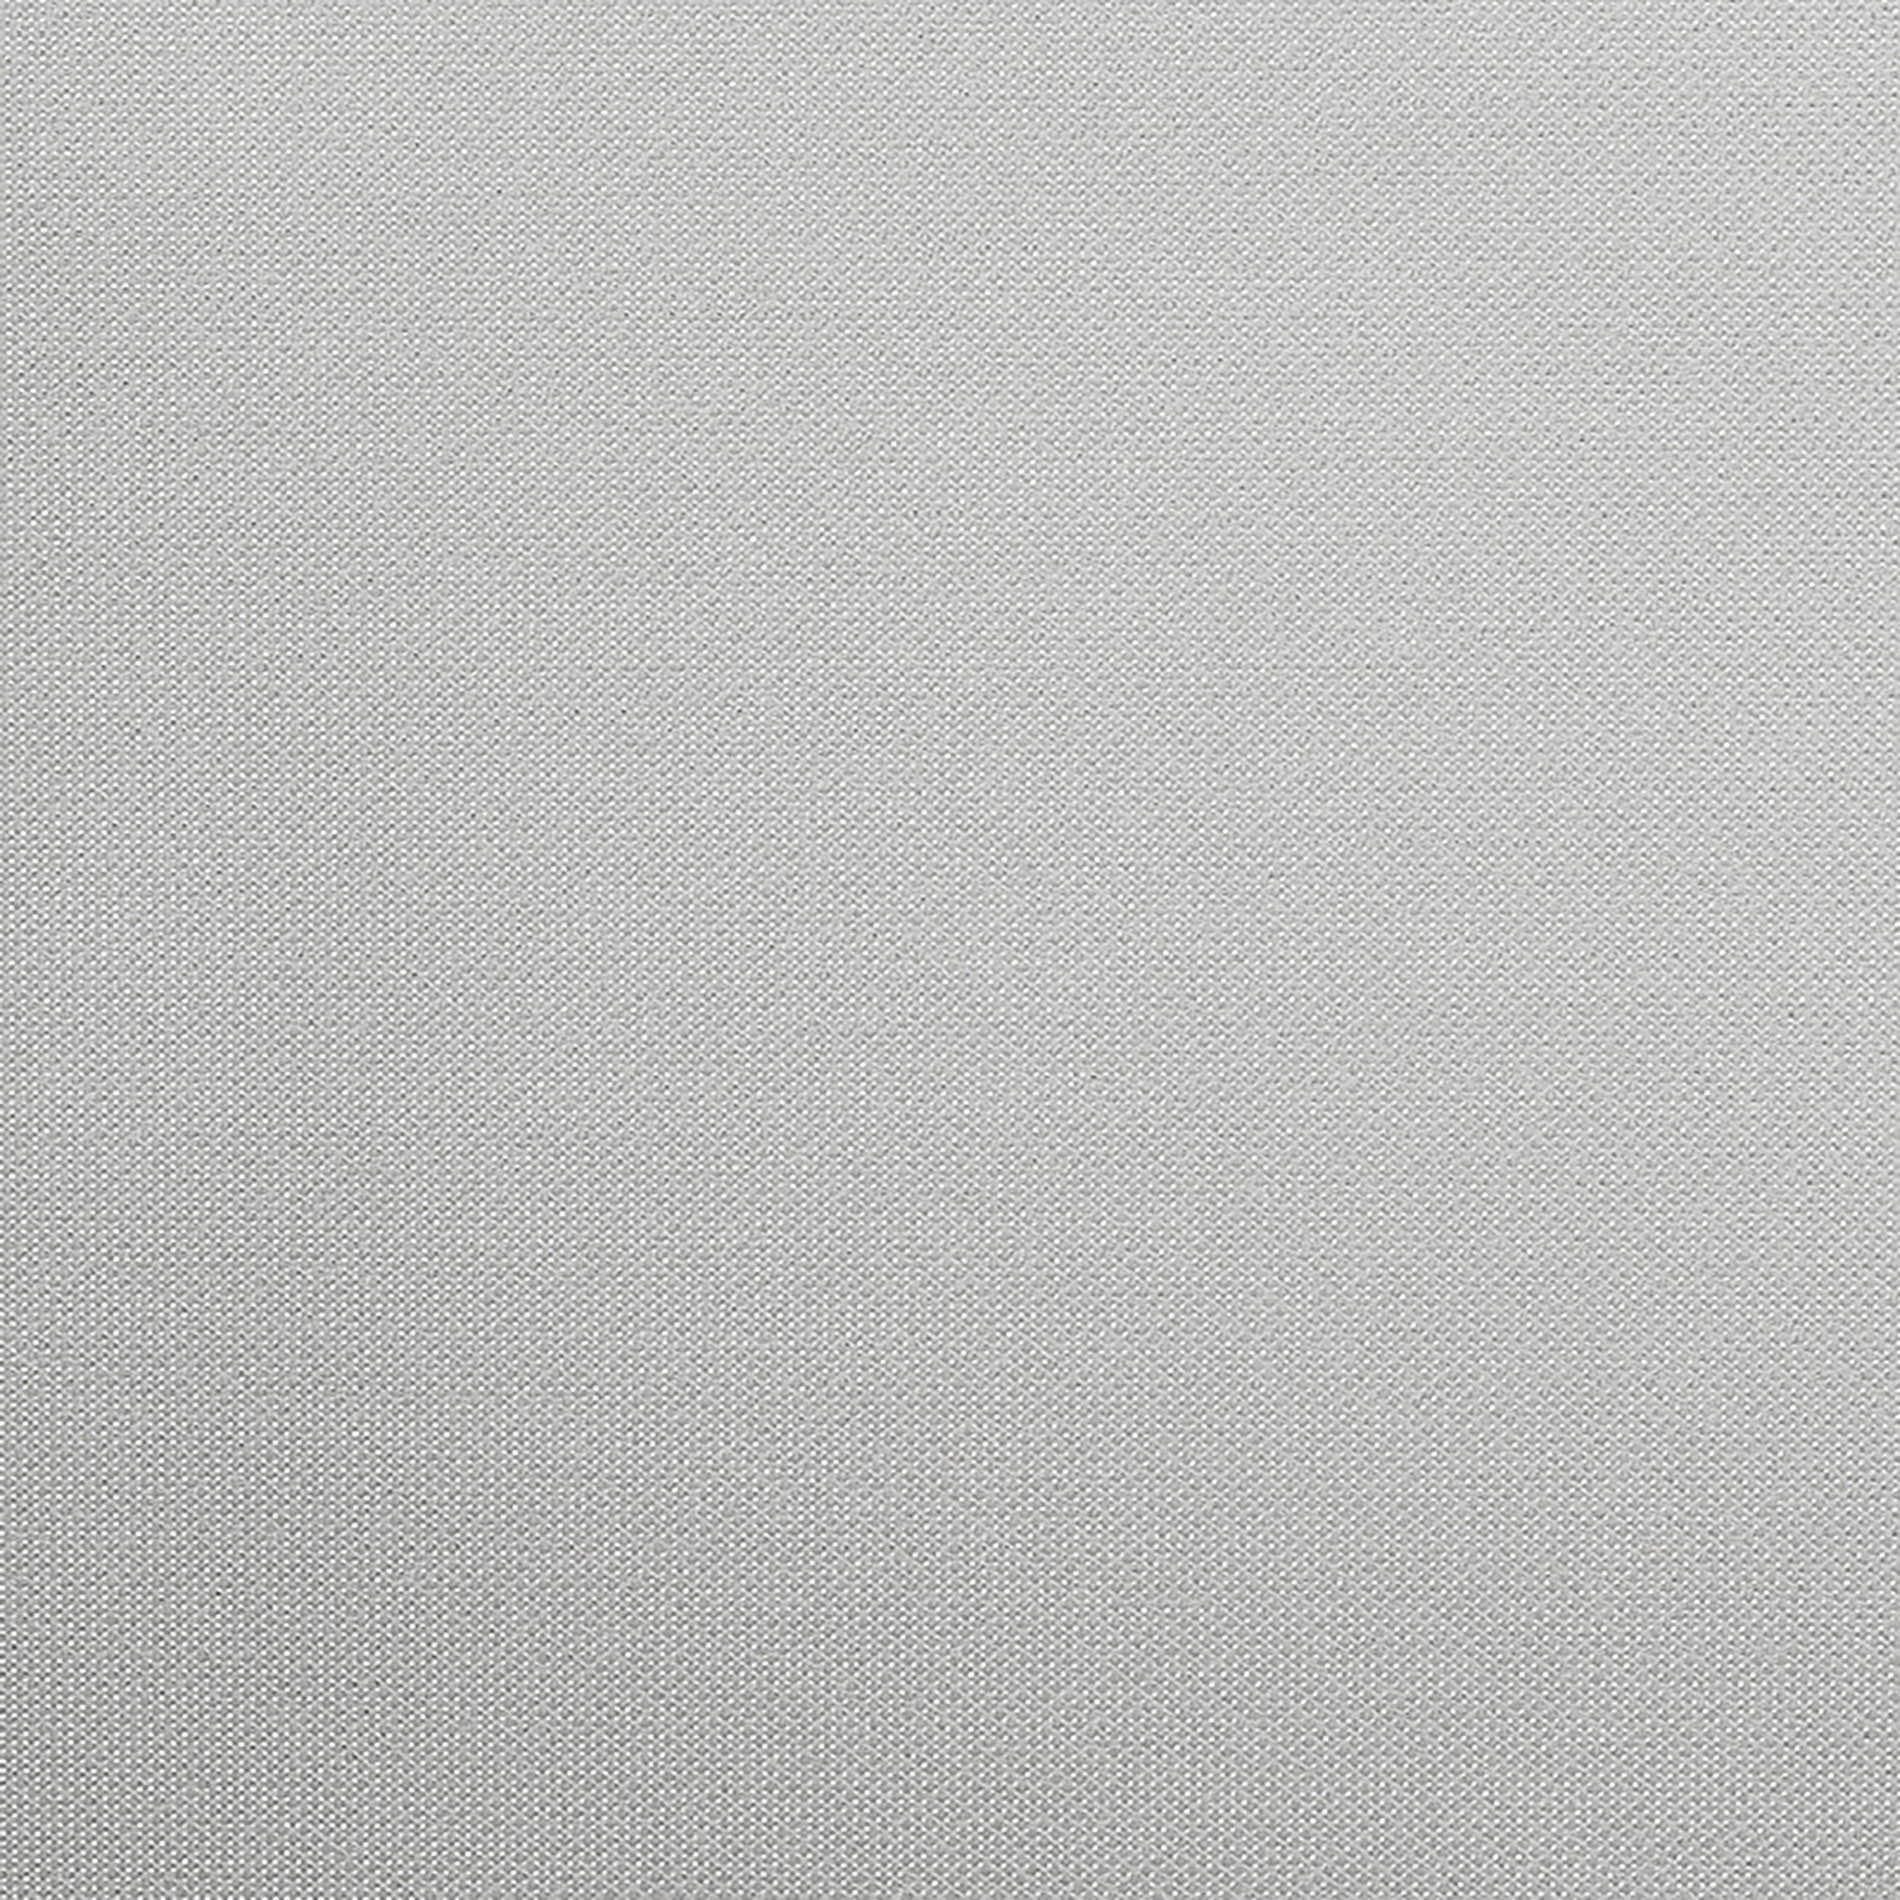 Altex - Fabric - ECOSCREEN 119600 - White/Metallized - 119601